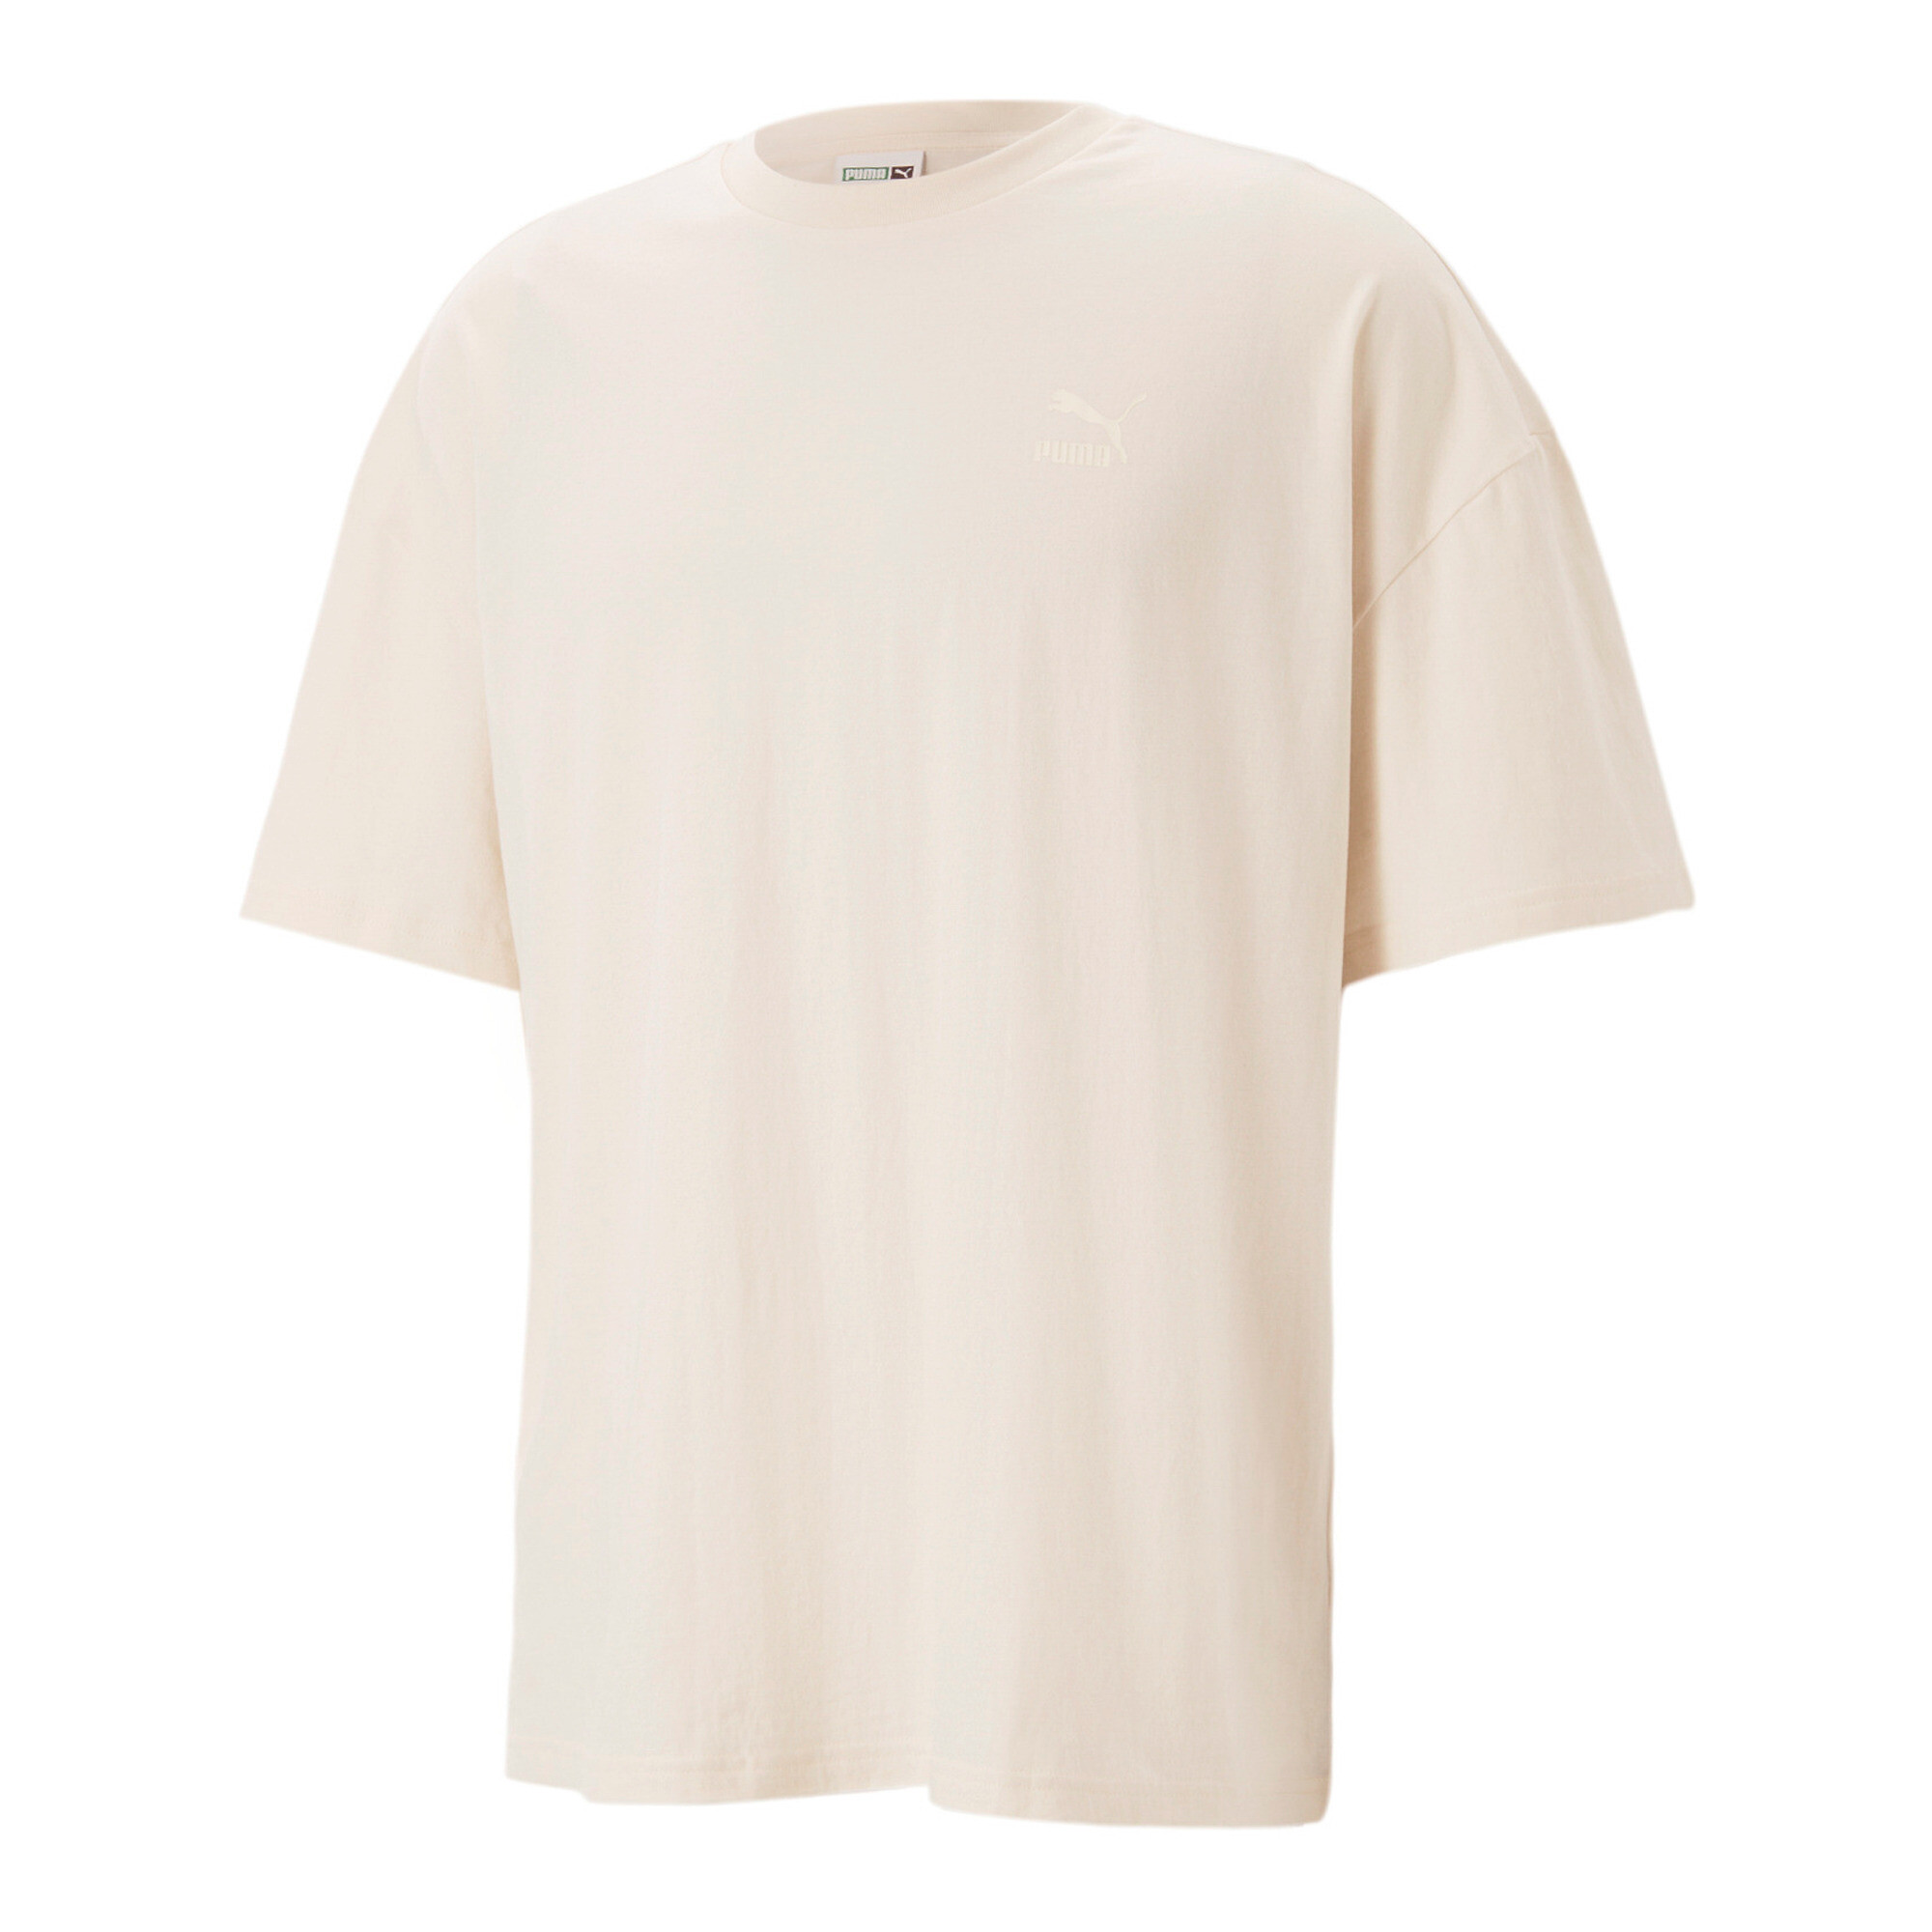 30%OFF！ プーマ ユニセックス CLASSICS オーバーサイズ 半袖 Tシャツ ユニセックス no color ｜PUMA.com